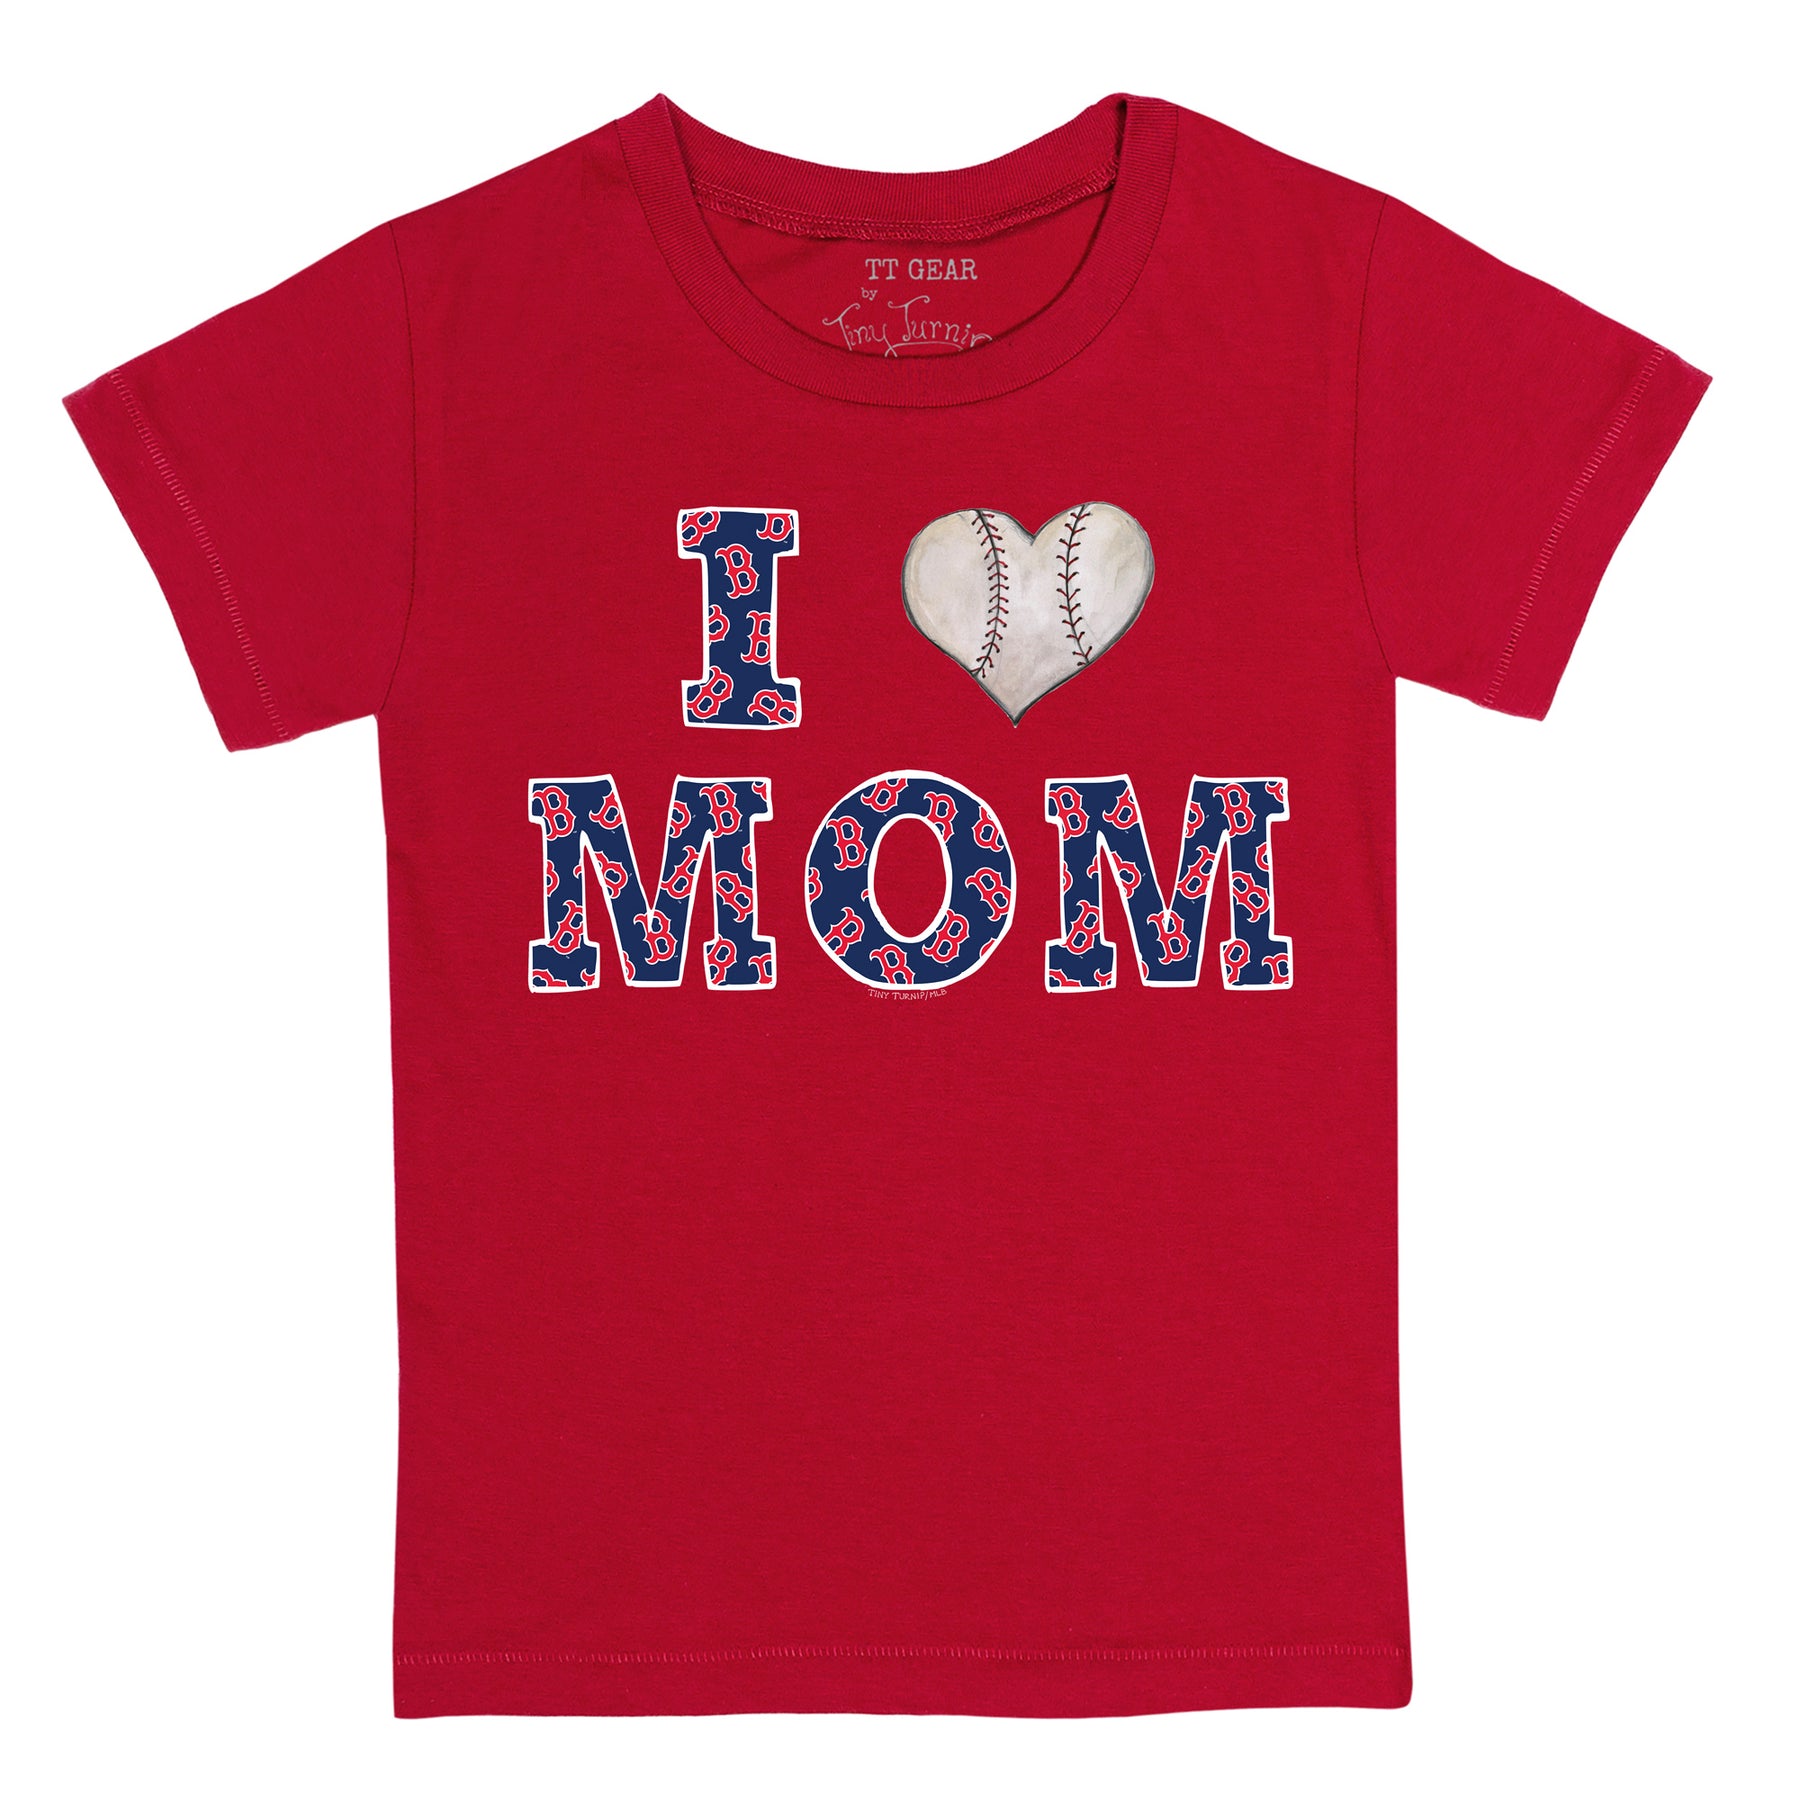 red sox mom shirt